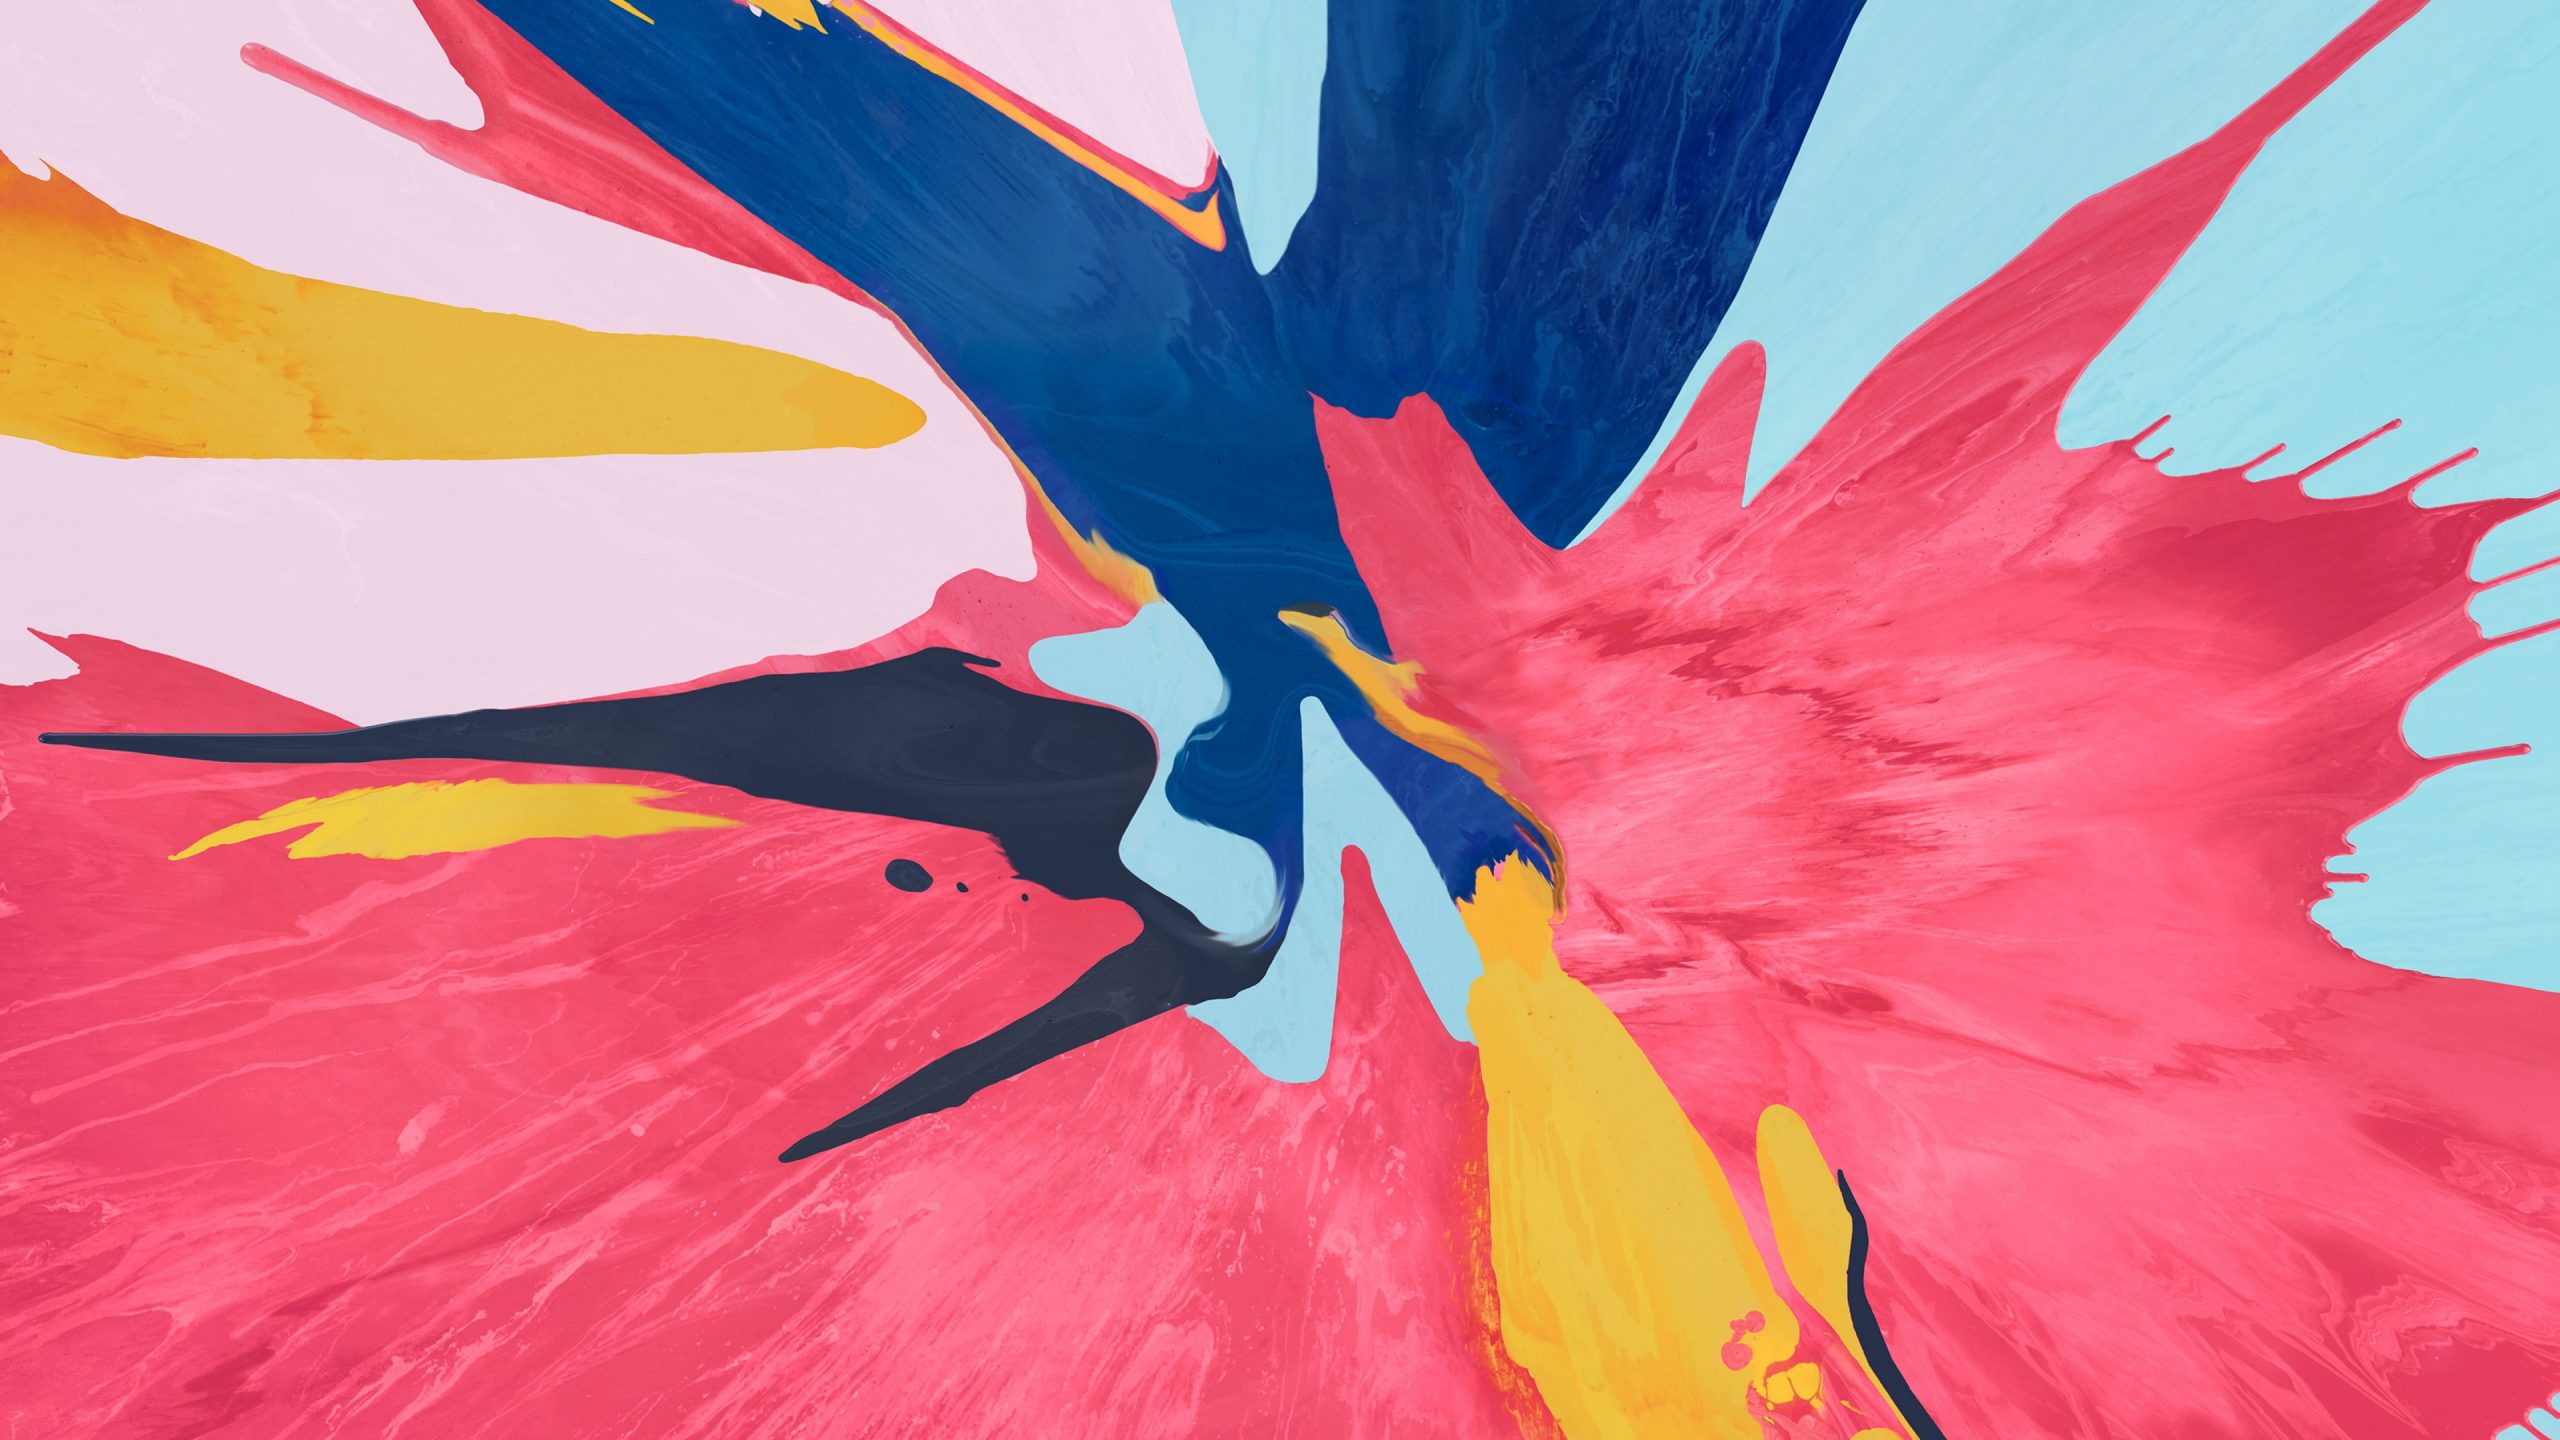 Wallpaper Abstract, Colorful, Ipad Pro 2018, 4k